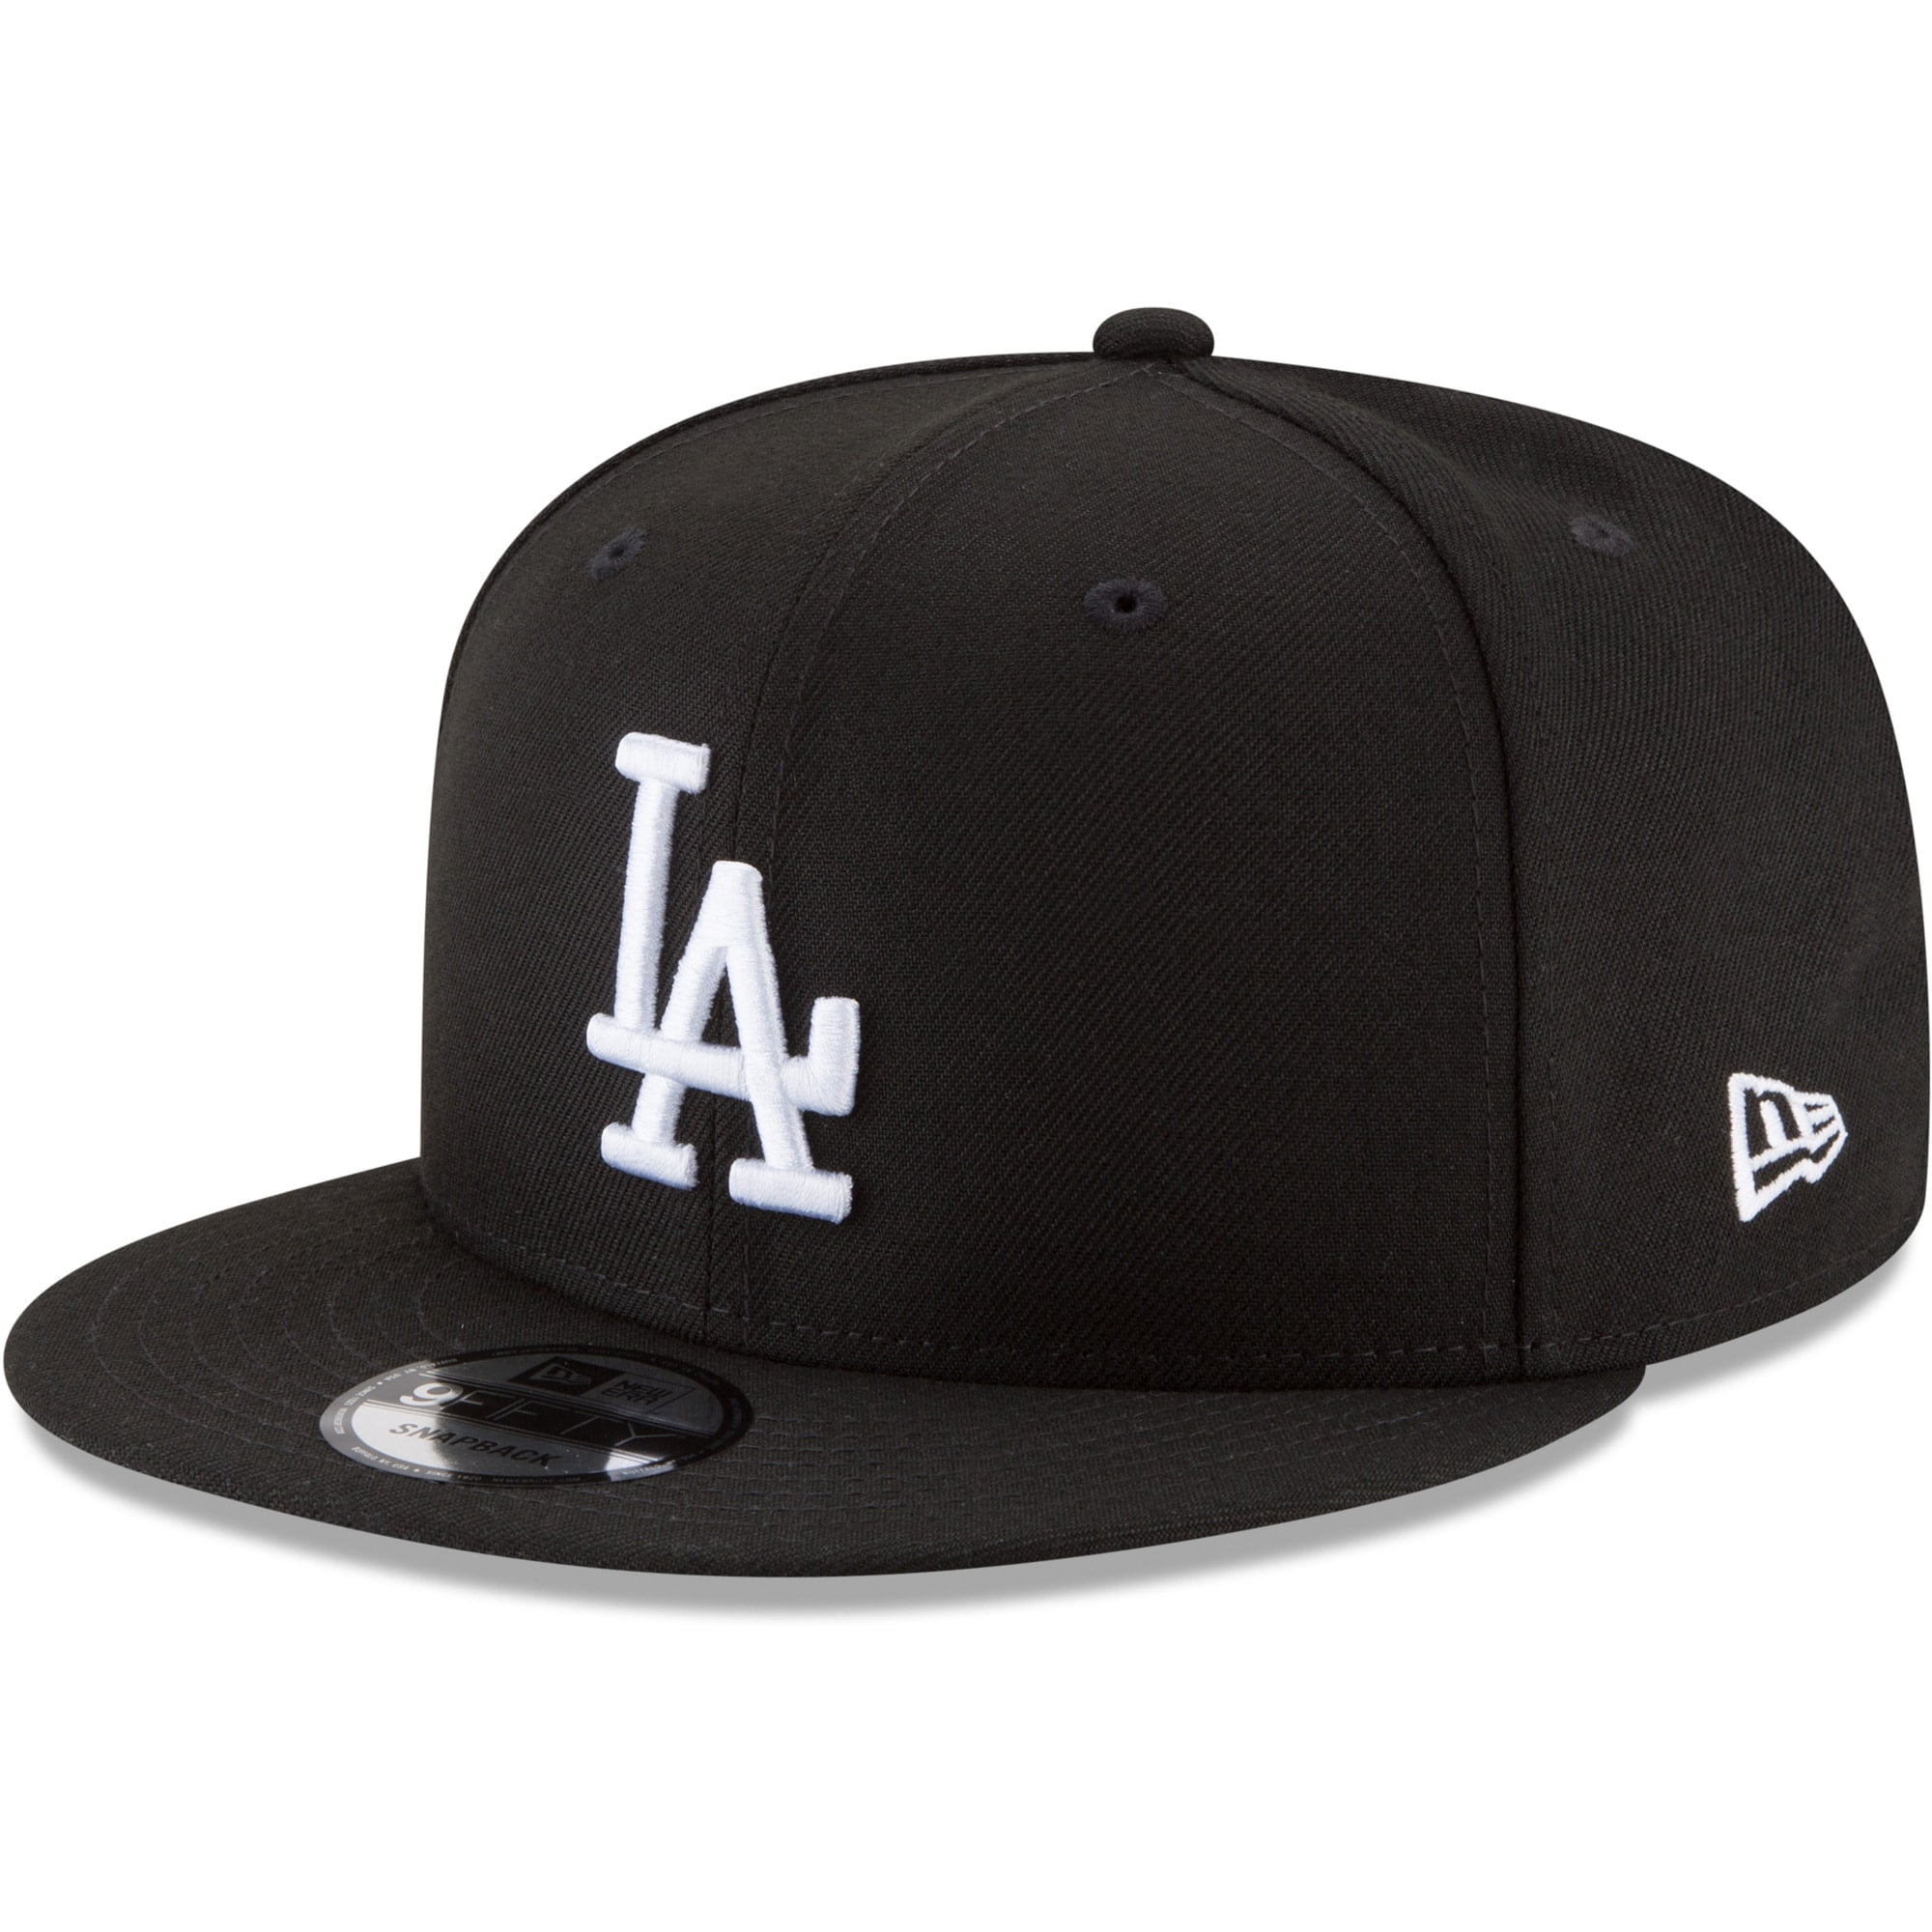 Los Angeles Dodgers New Era Black & White 9FIFTY Snapback Hat Black